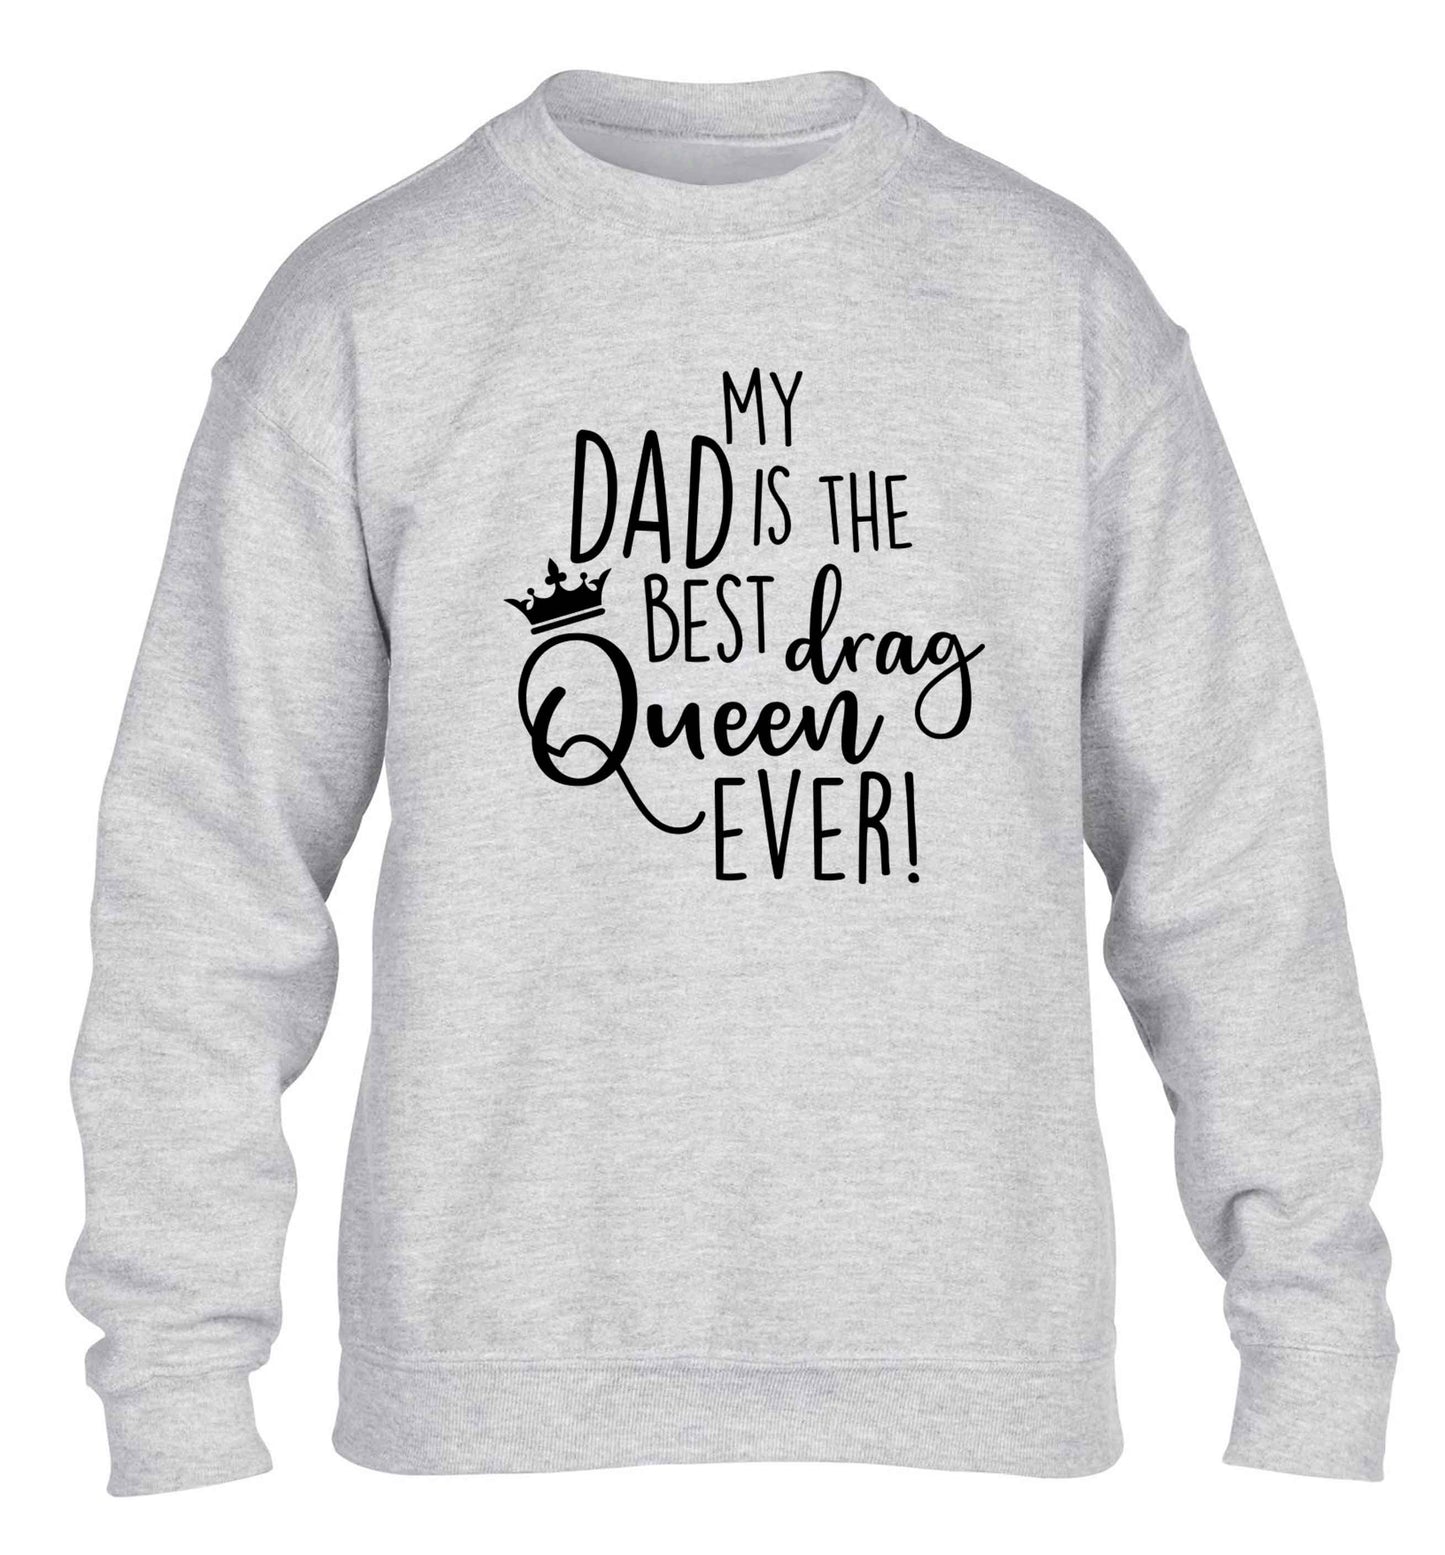 My dad is the best drag Queen ever children's grey sweater 12-13 Years